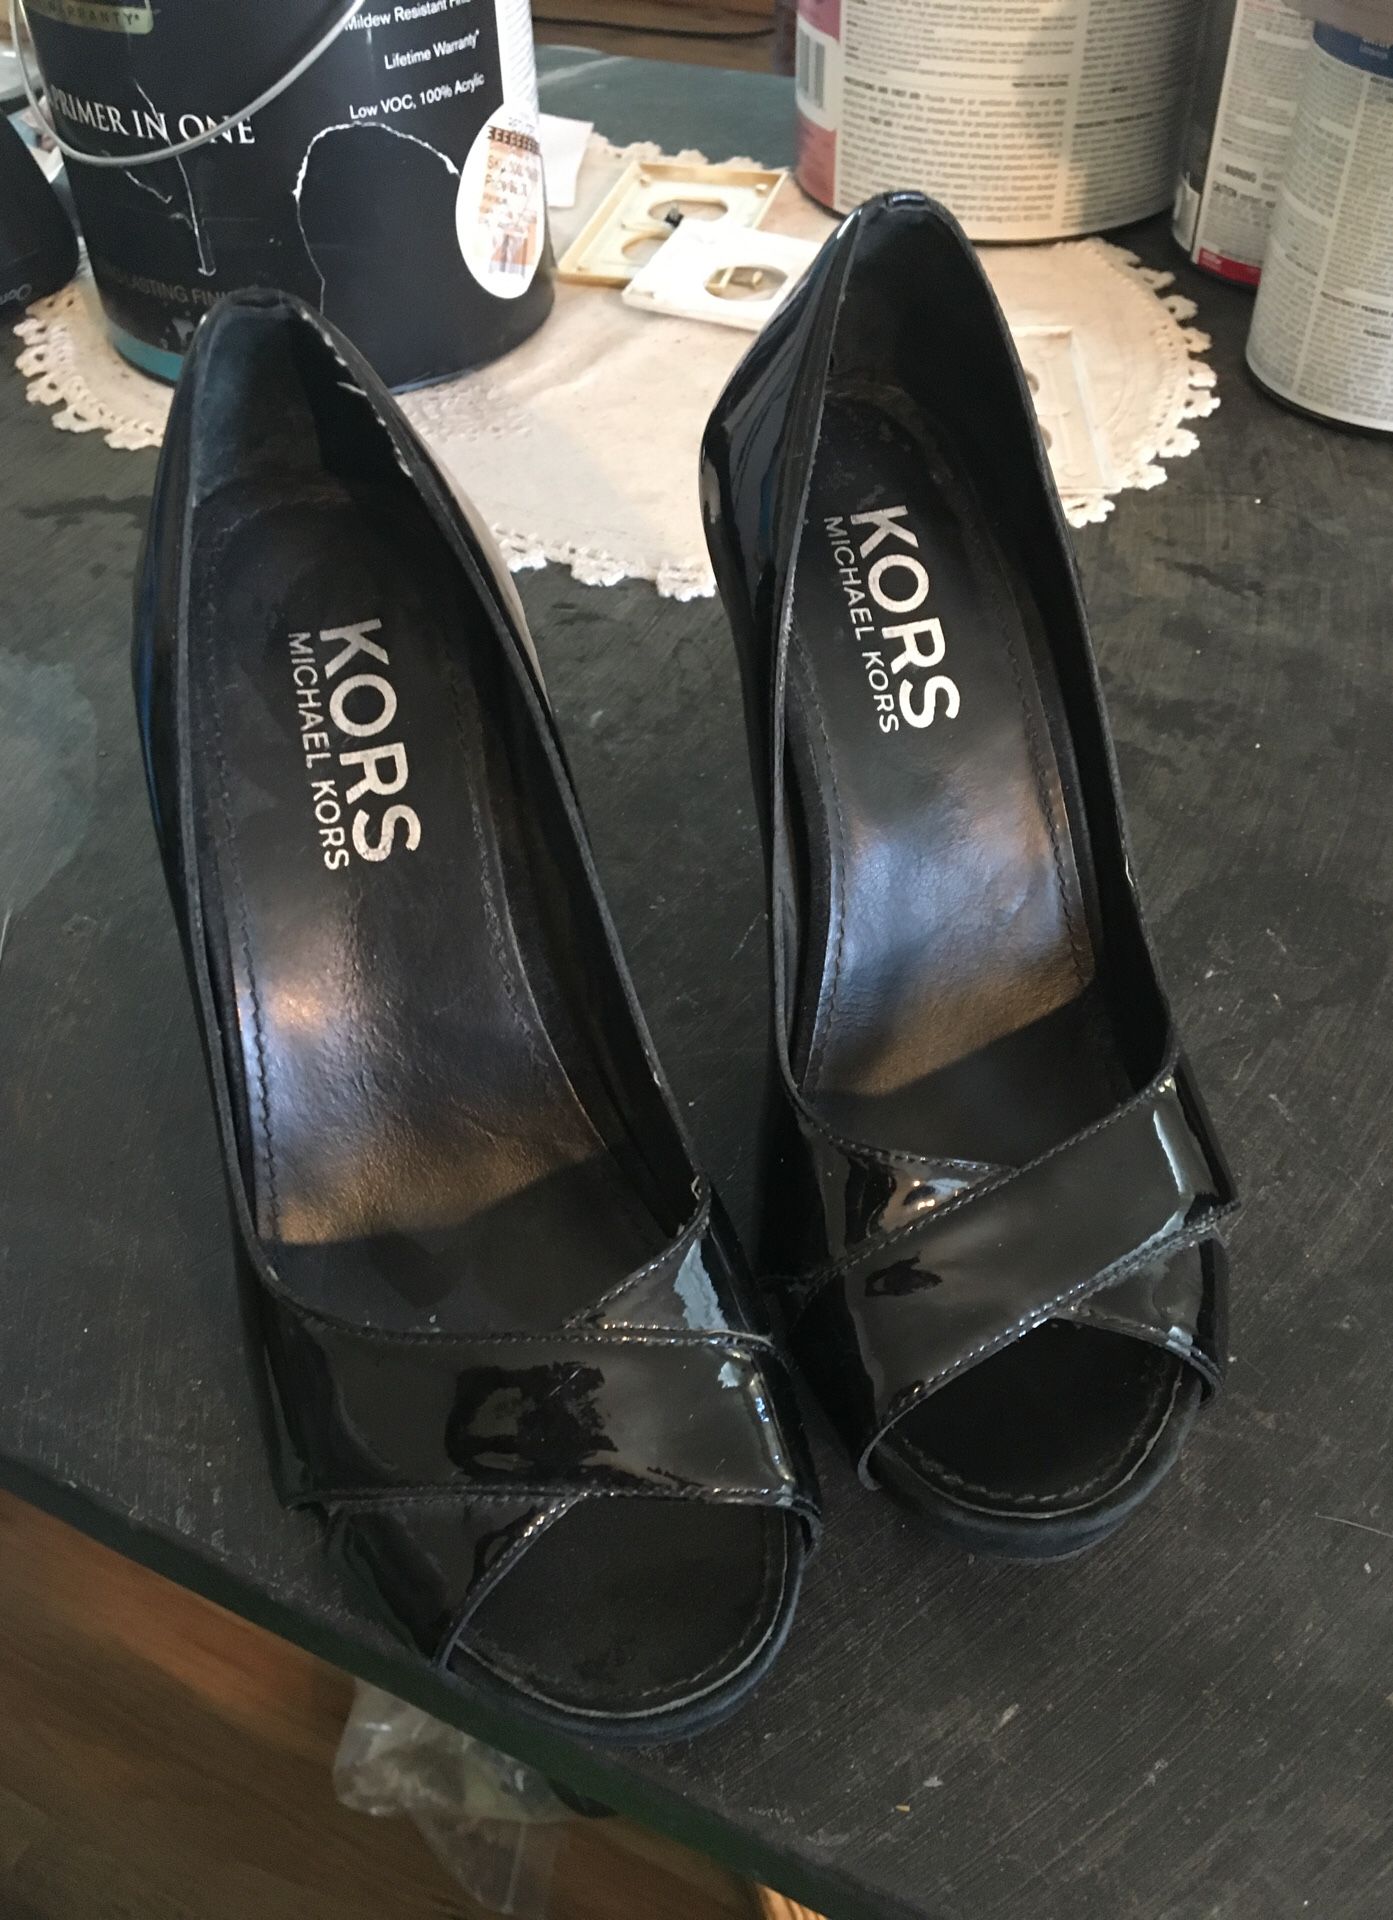 Michael Kors high heels